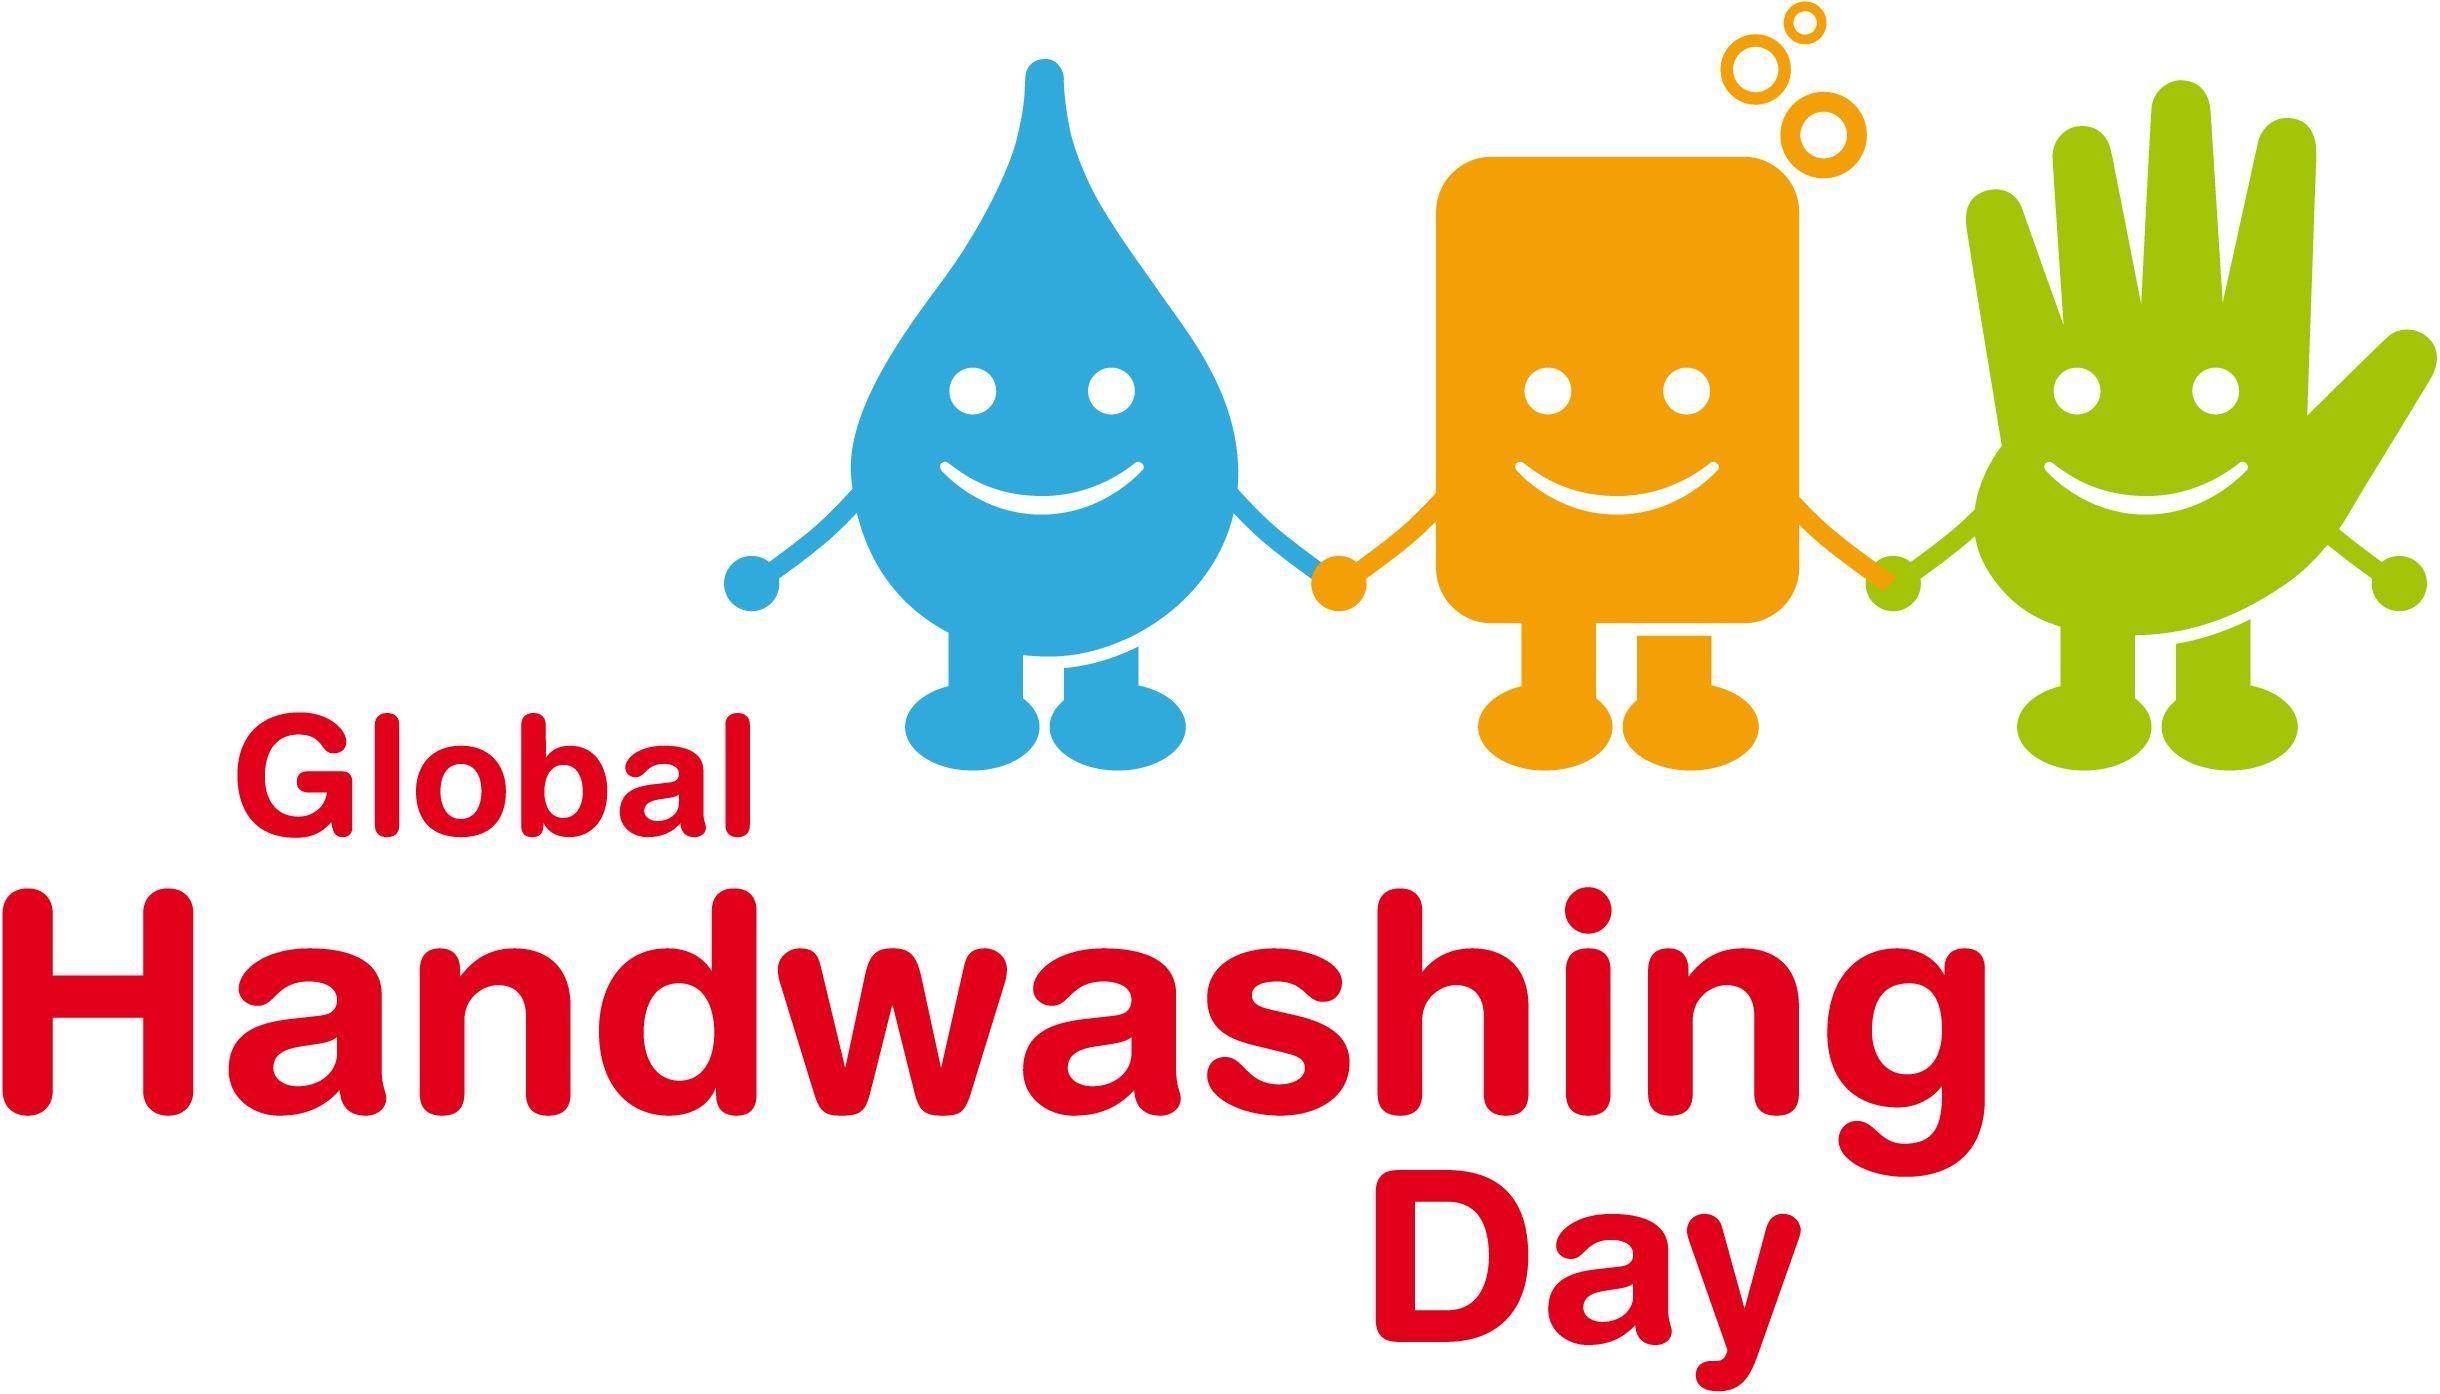 global handwashing day 2017 - Image Search Results. Global